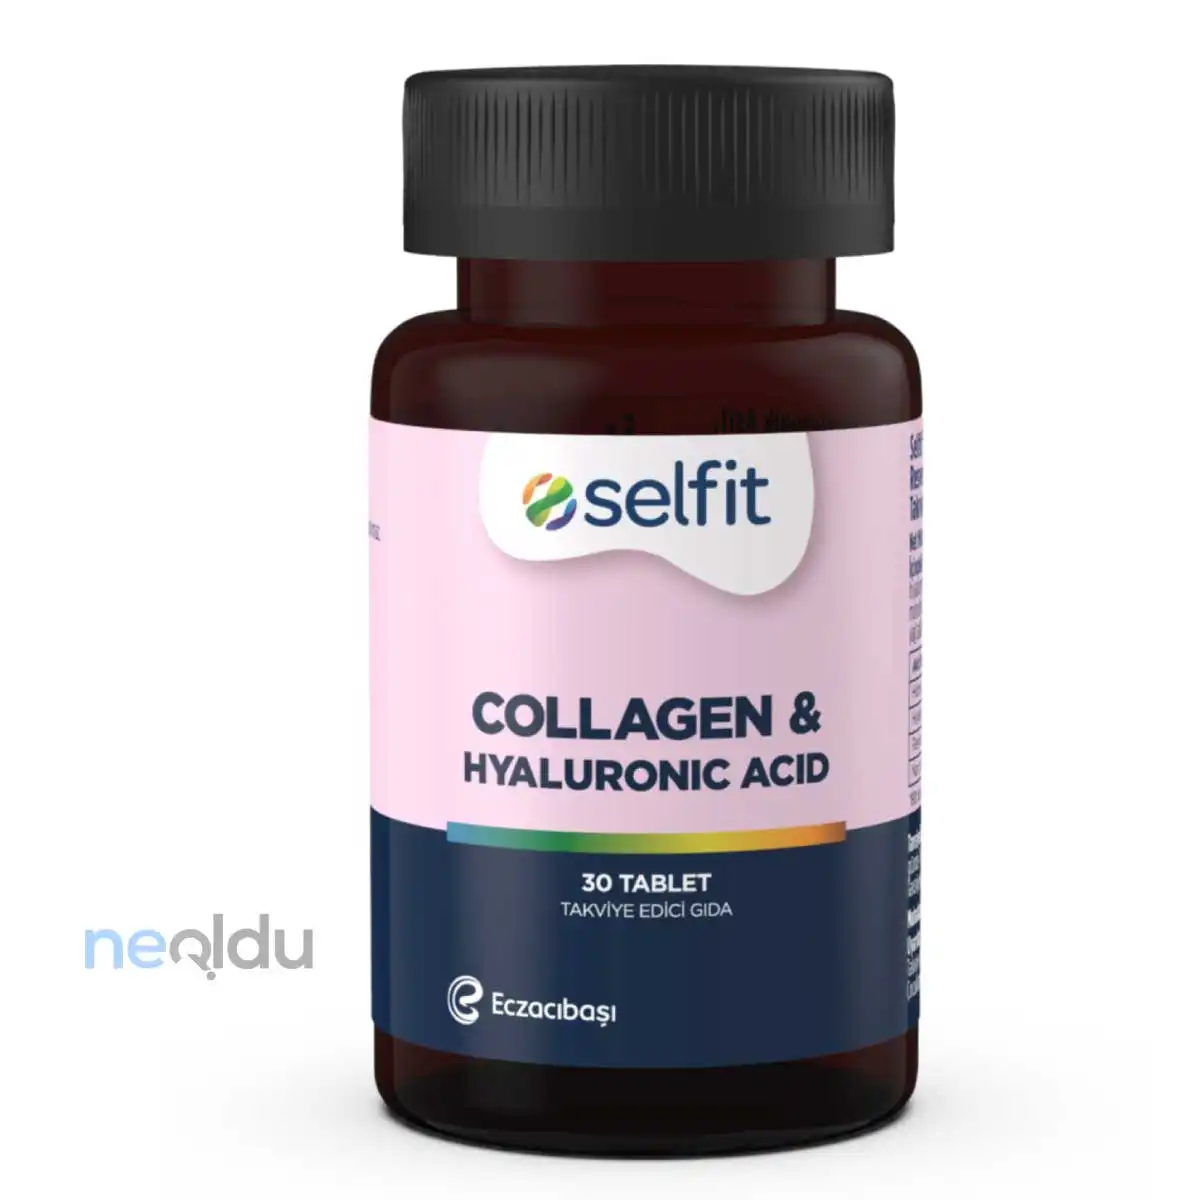 En İyi Kolajen Selfit Collagen & Hyaluronic Acid